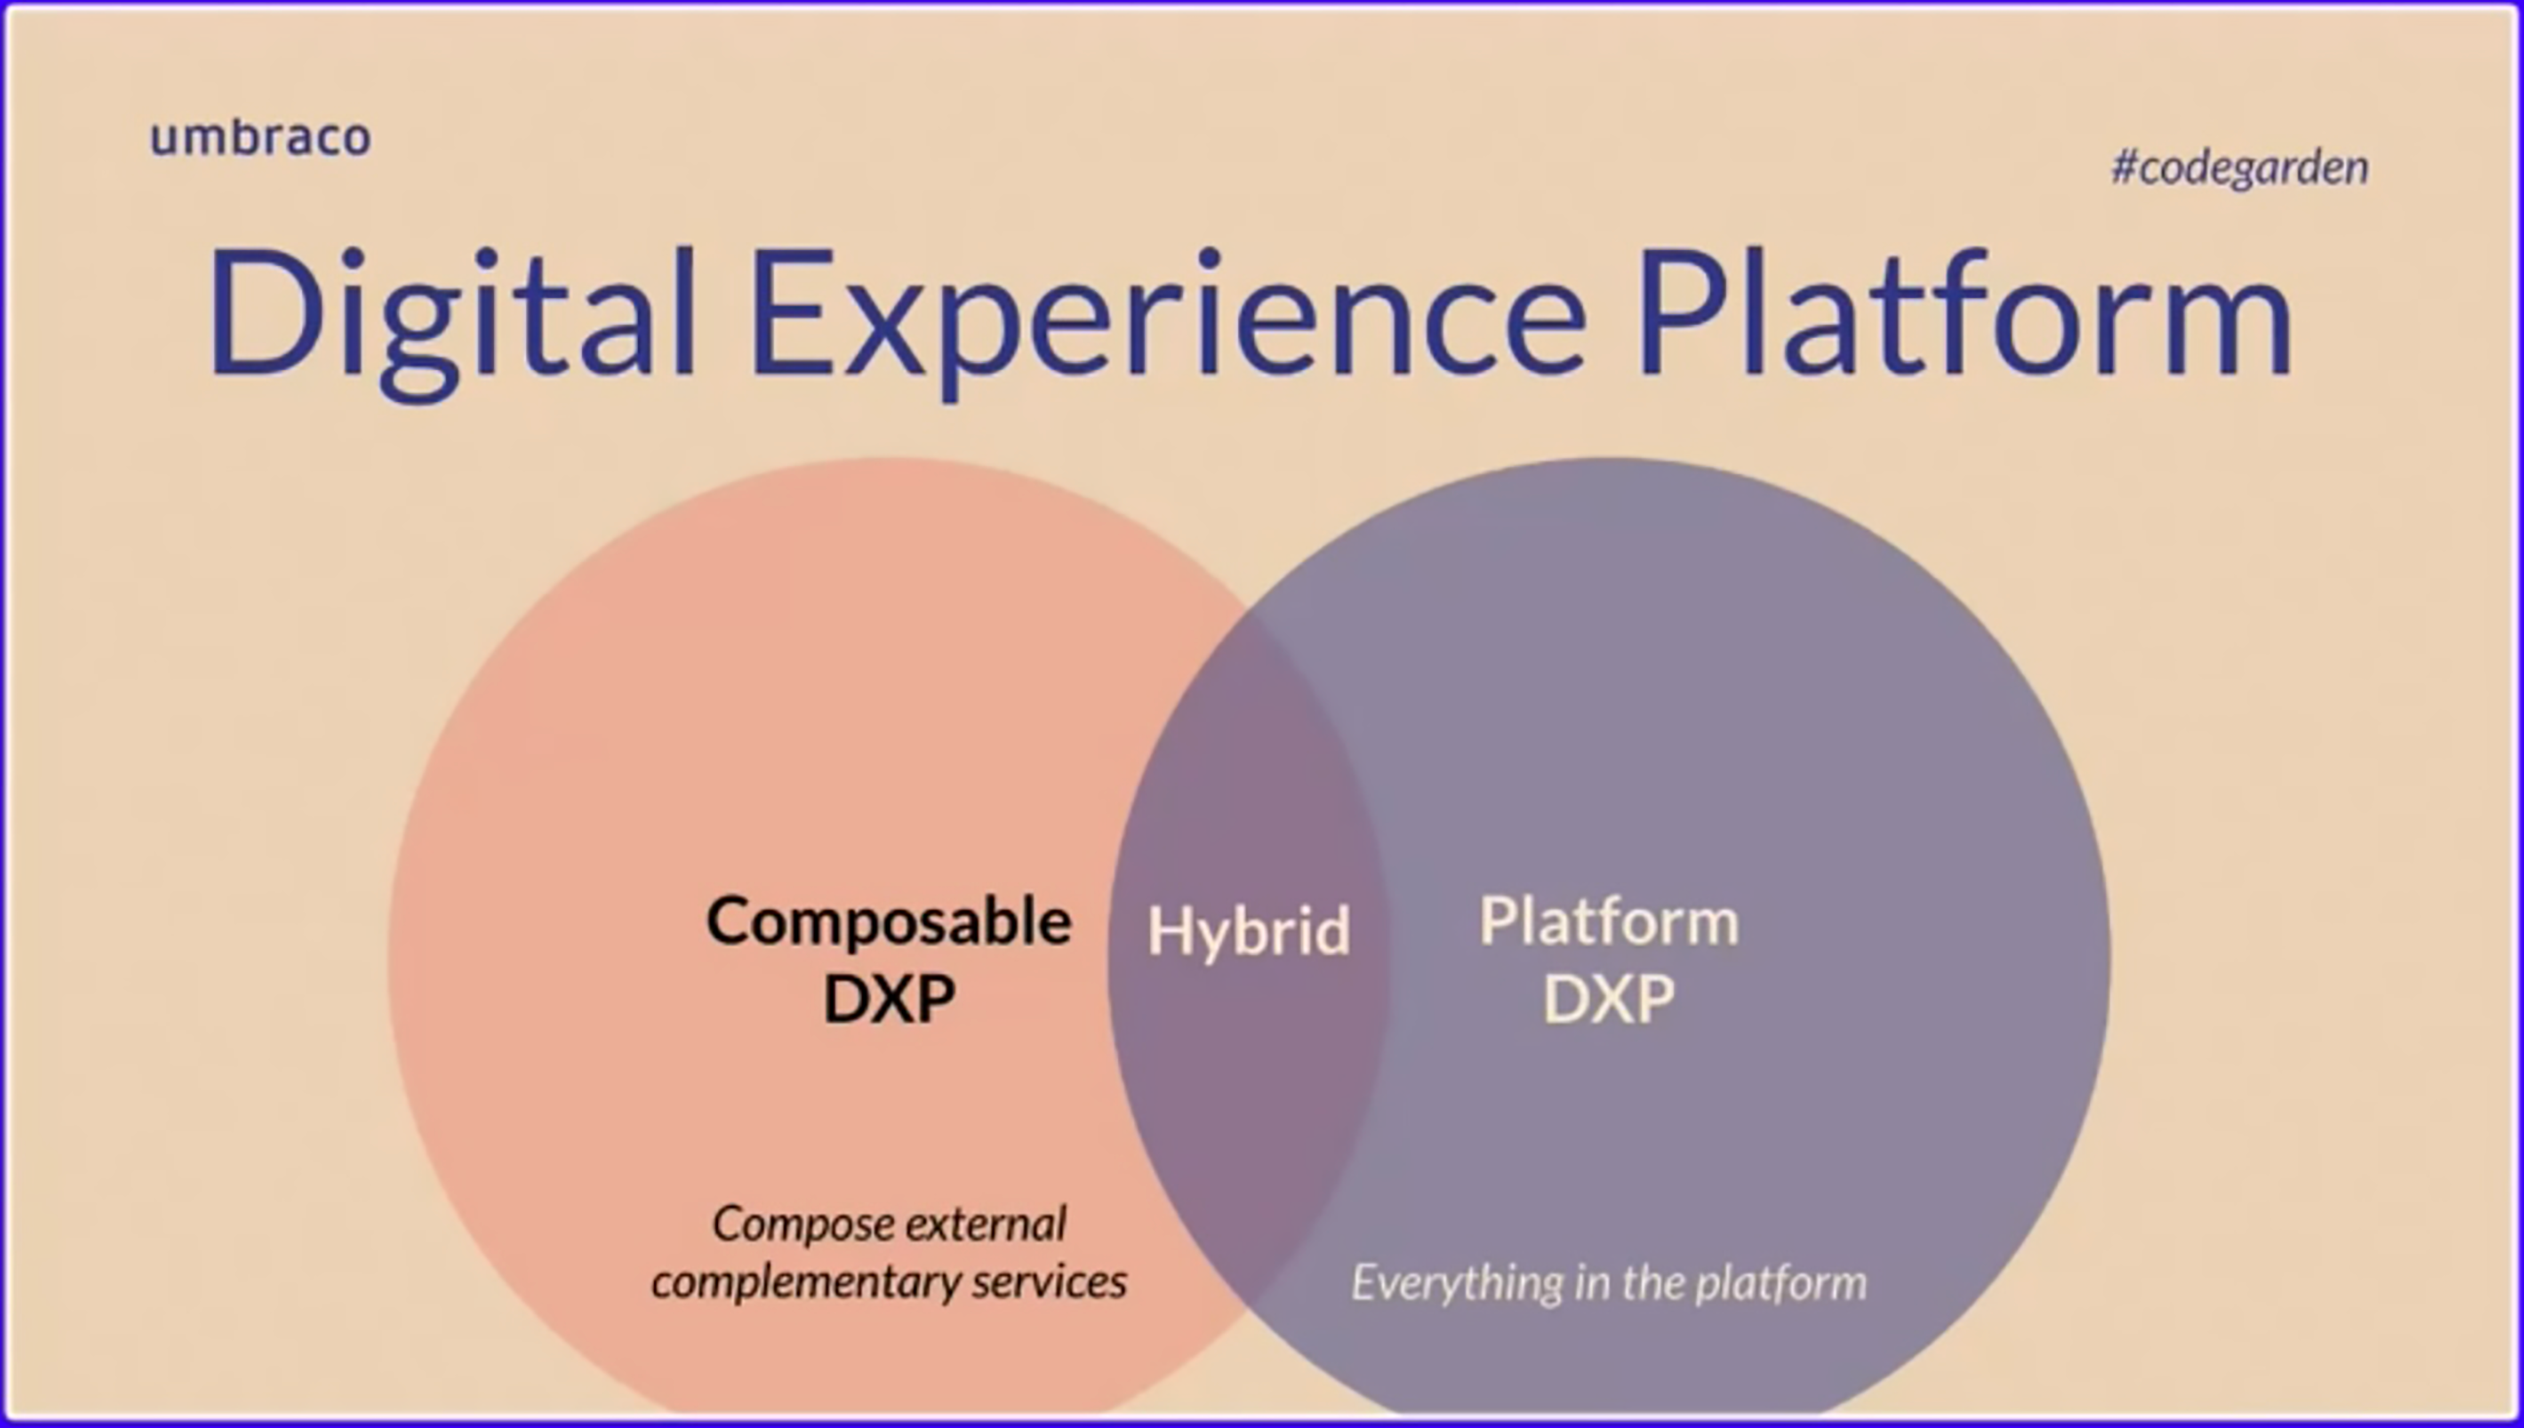 Umbraco's Digital Experience Platform